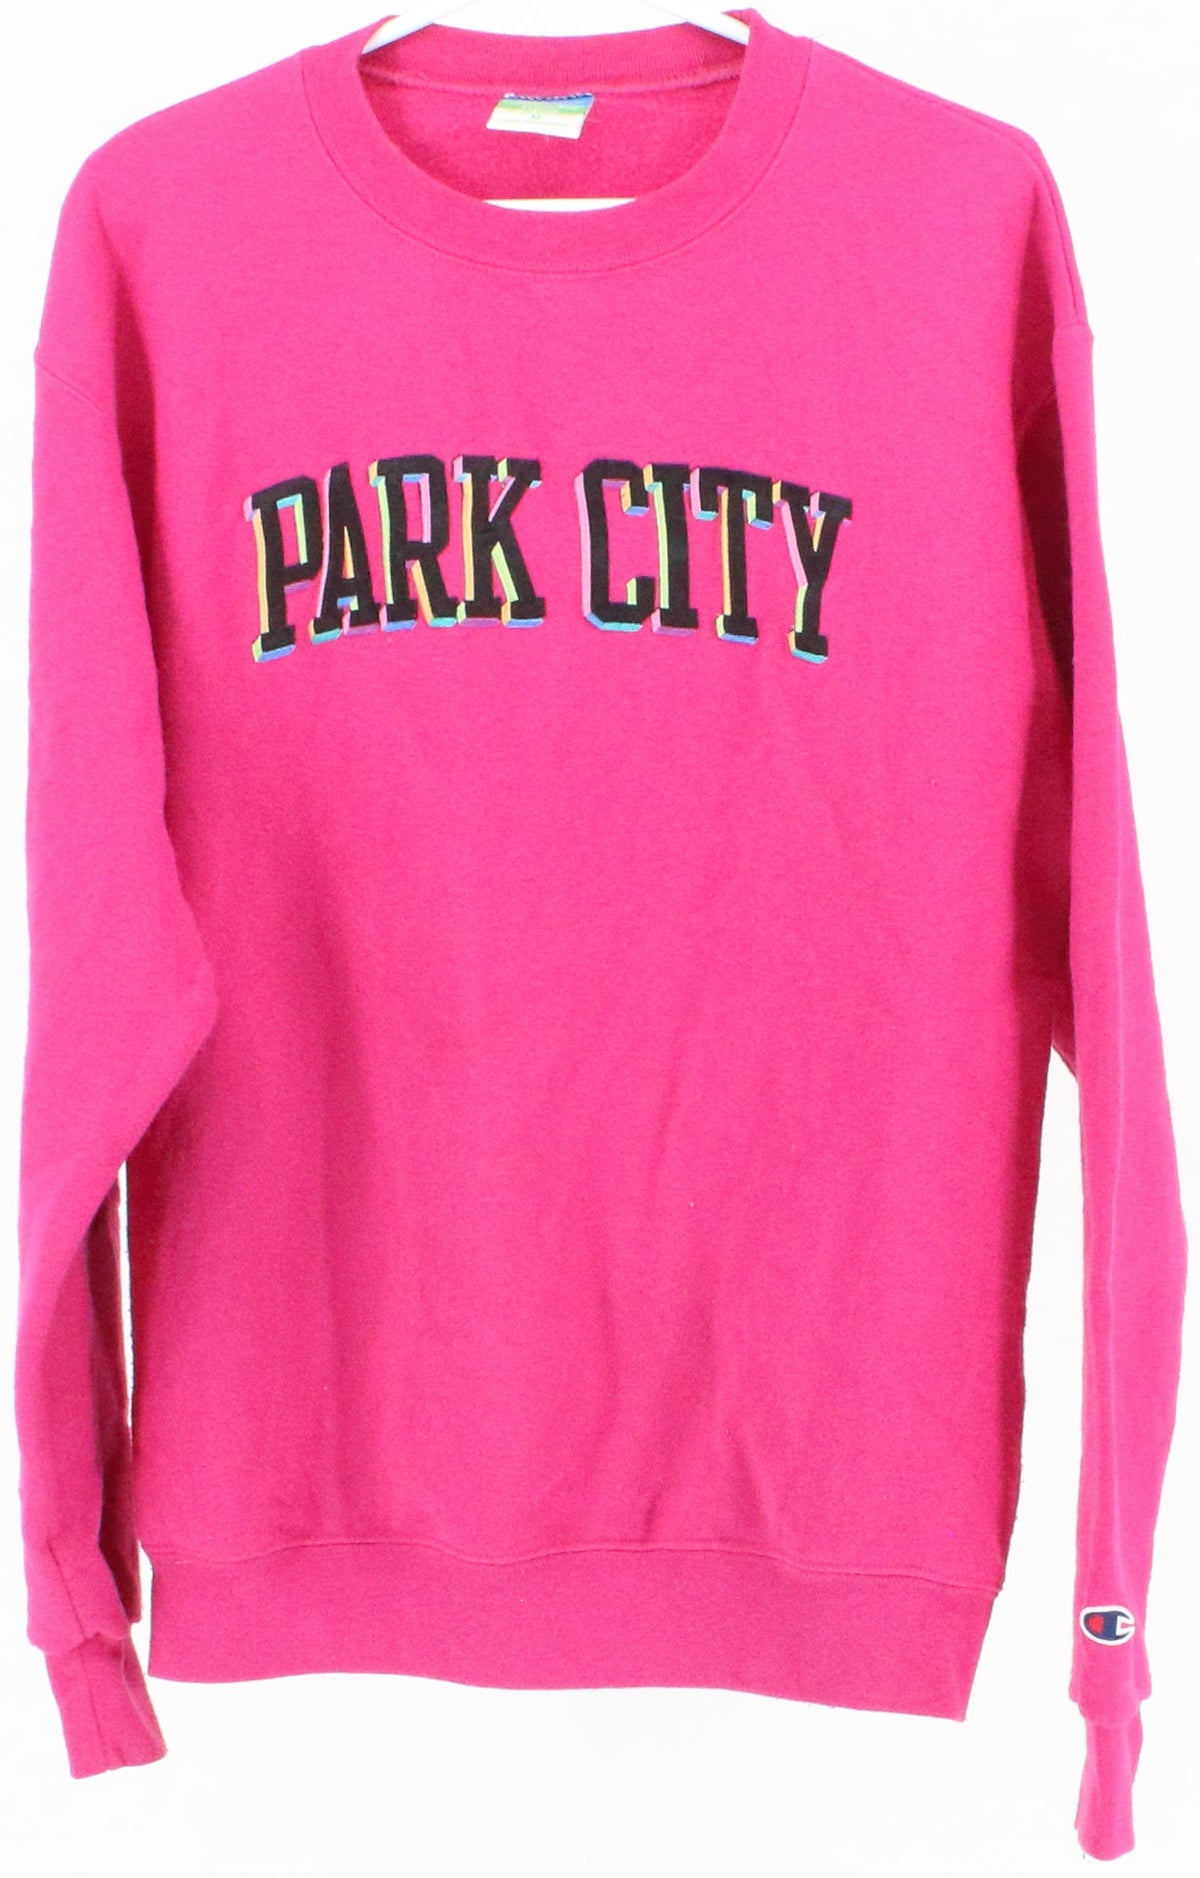 Champion Park City Pink Sweatshirt